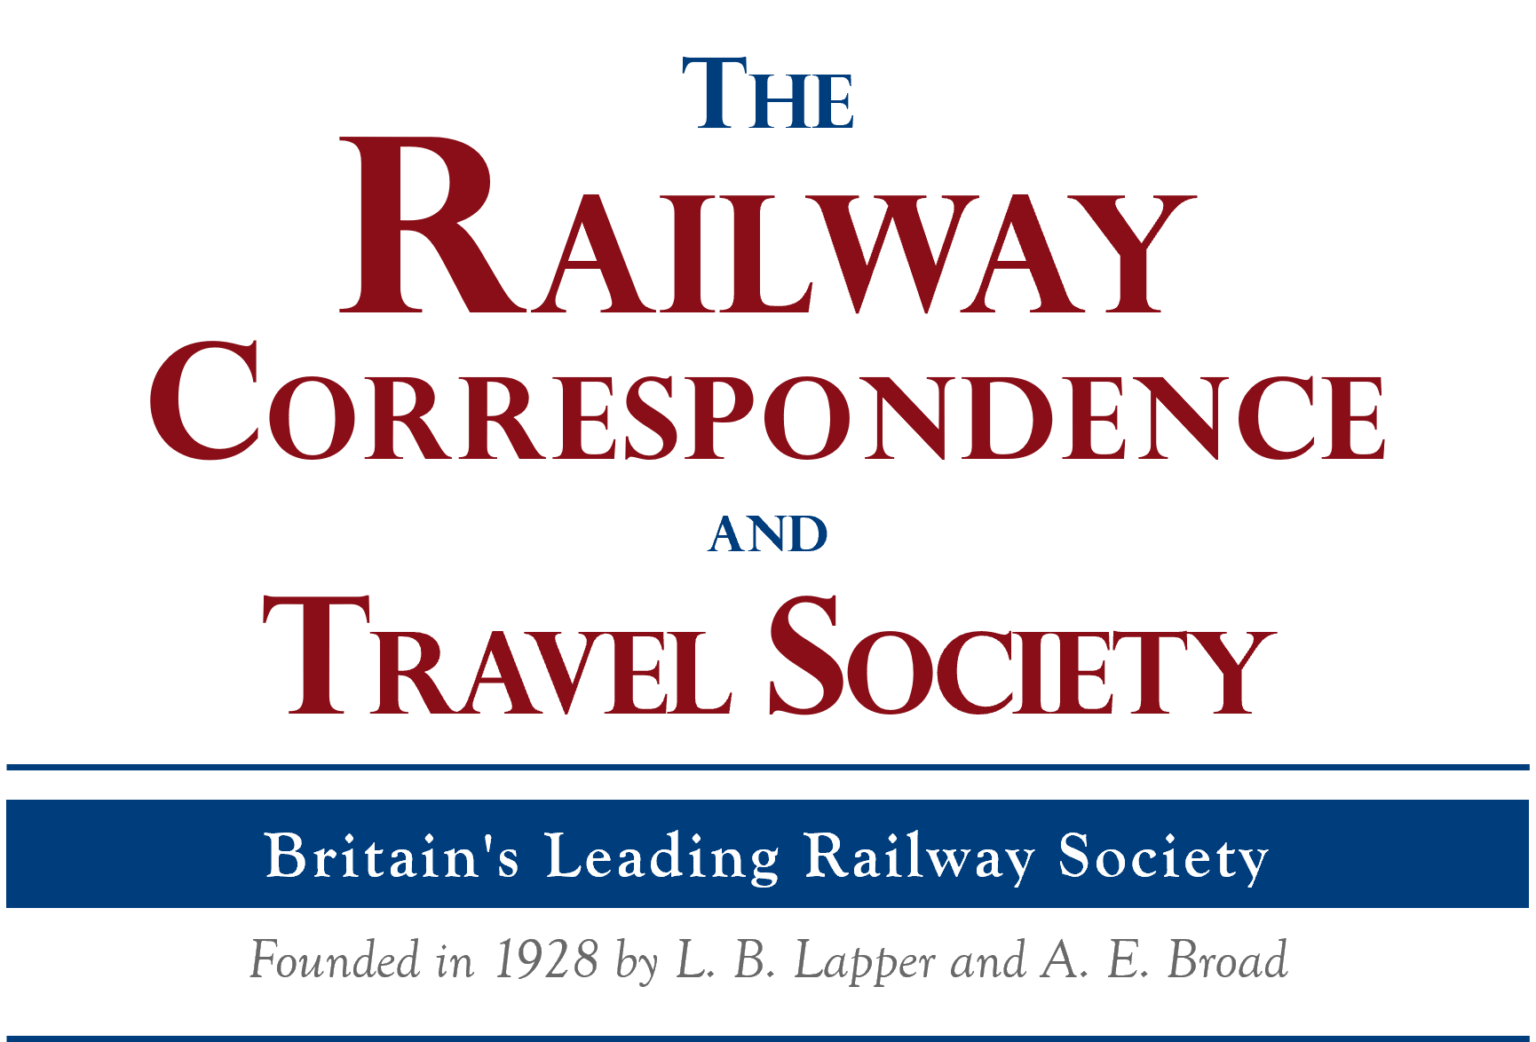 railway travel and correspondence society